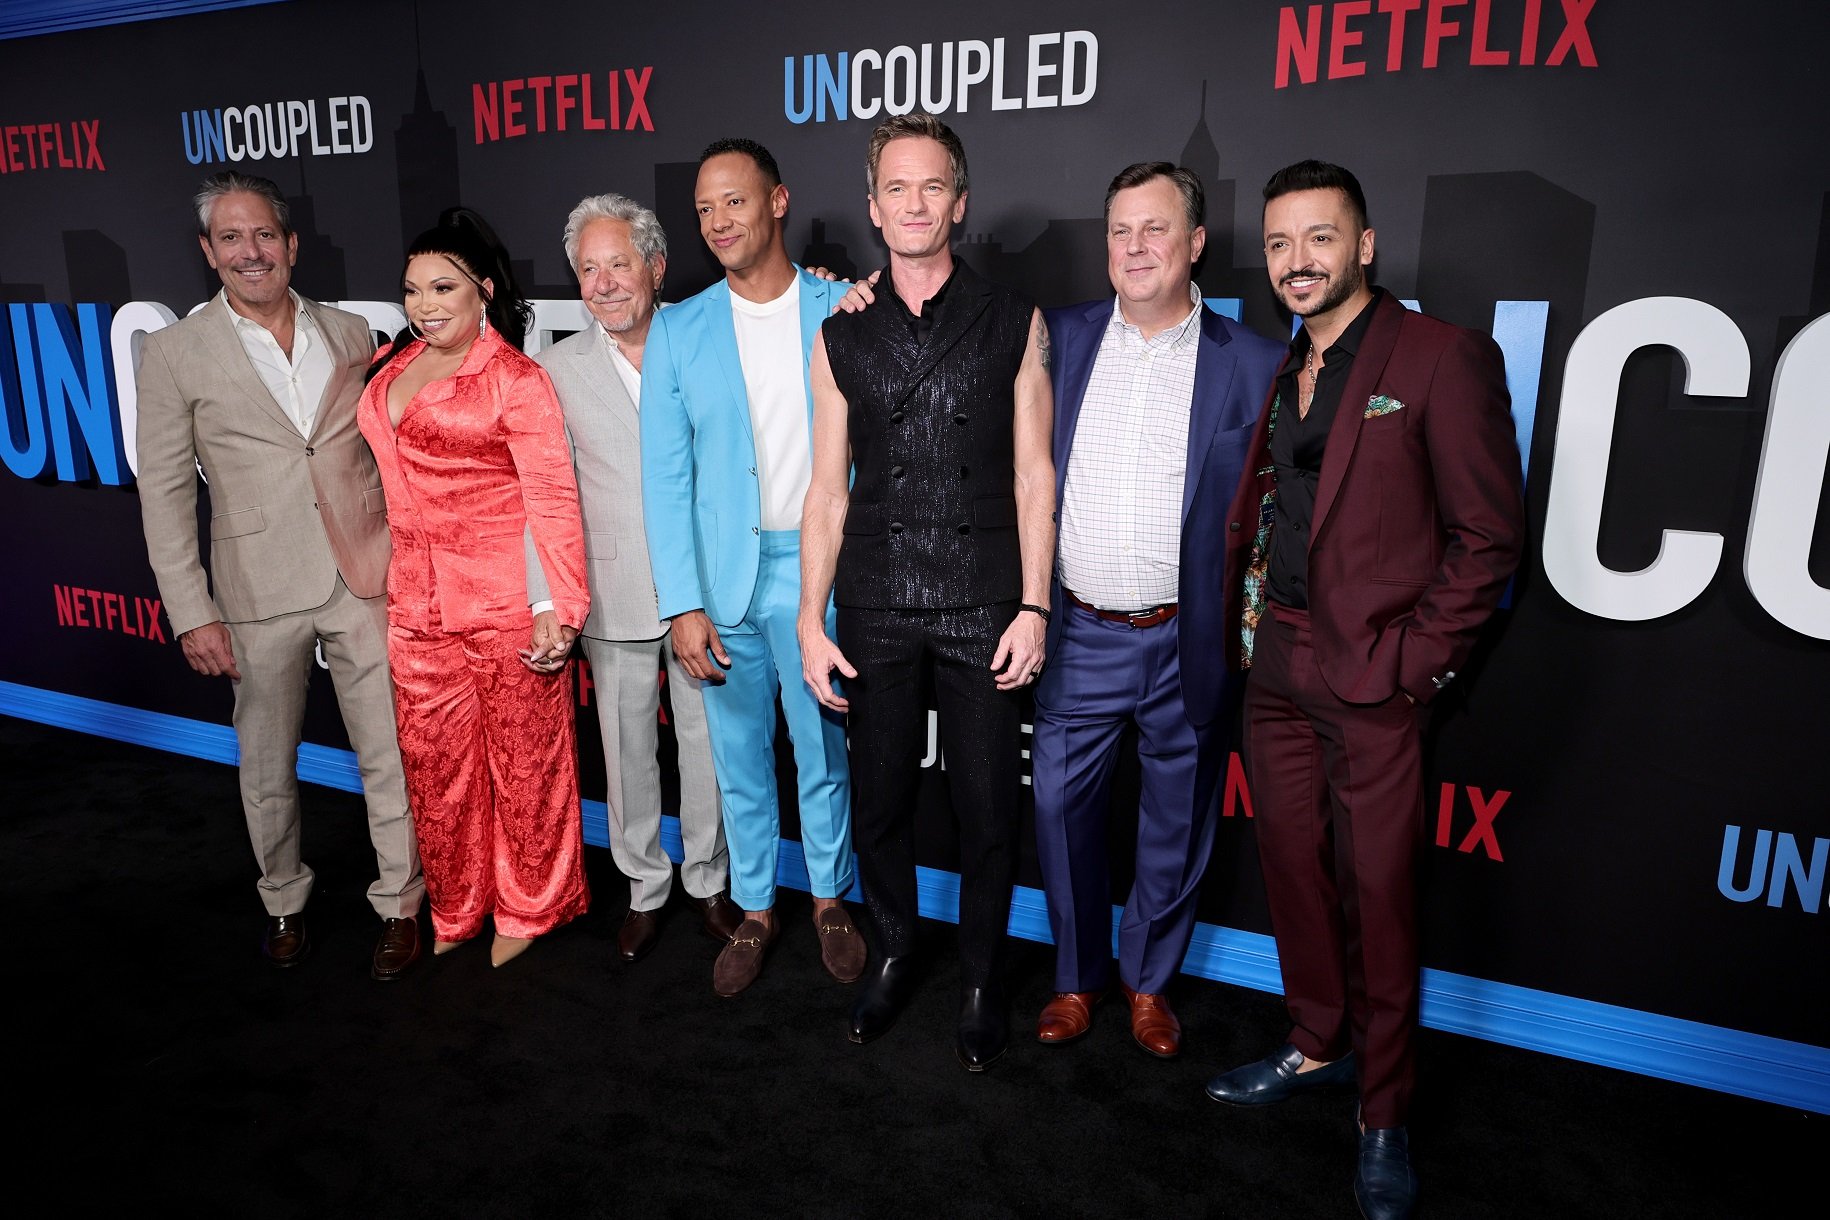 Darren Star, Tisha Campbell-Martin, Jeffrey Richman, Emerson Brooks, Neil Patrick Harris, Brooks Ashmanskas and Jai Rodriguez attend Netflix's Uncoupled